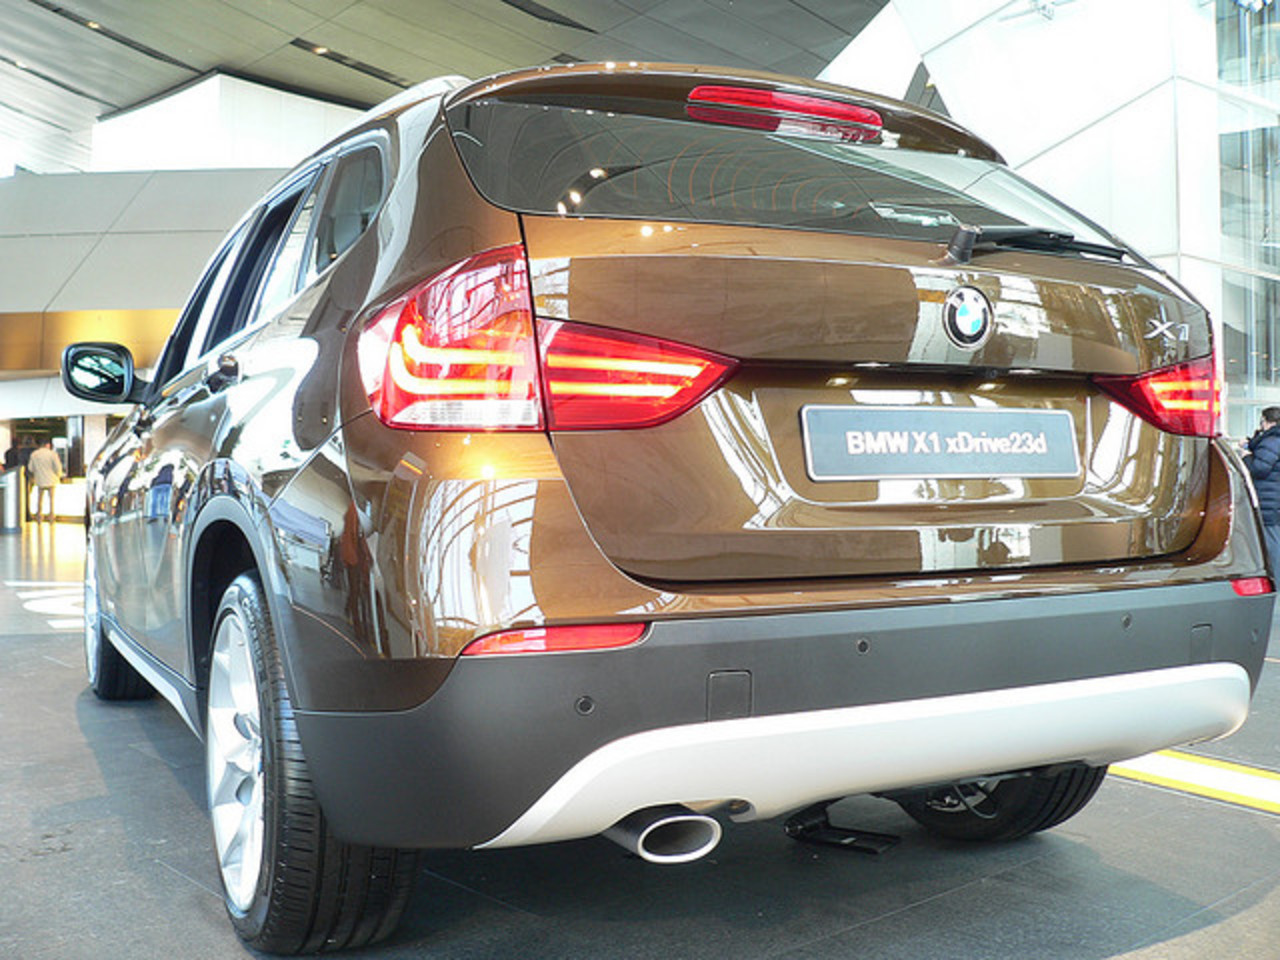 BMW X1 xDrive23d | Flickr - Photo Sharing!